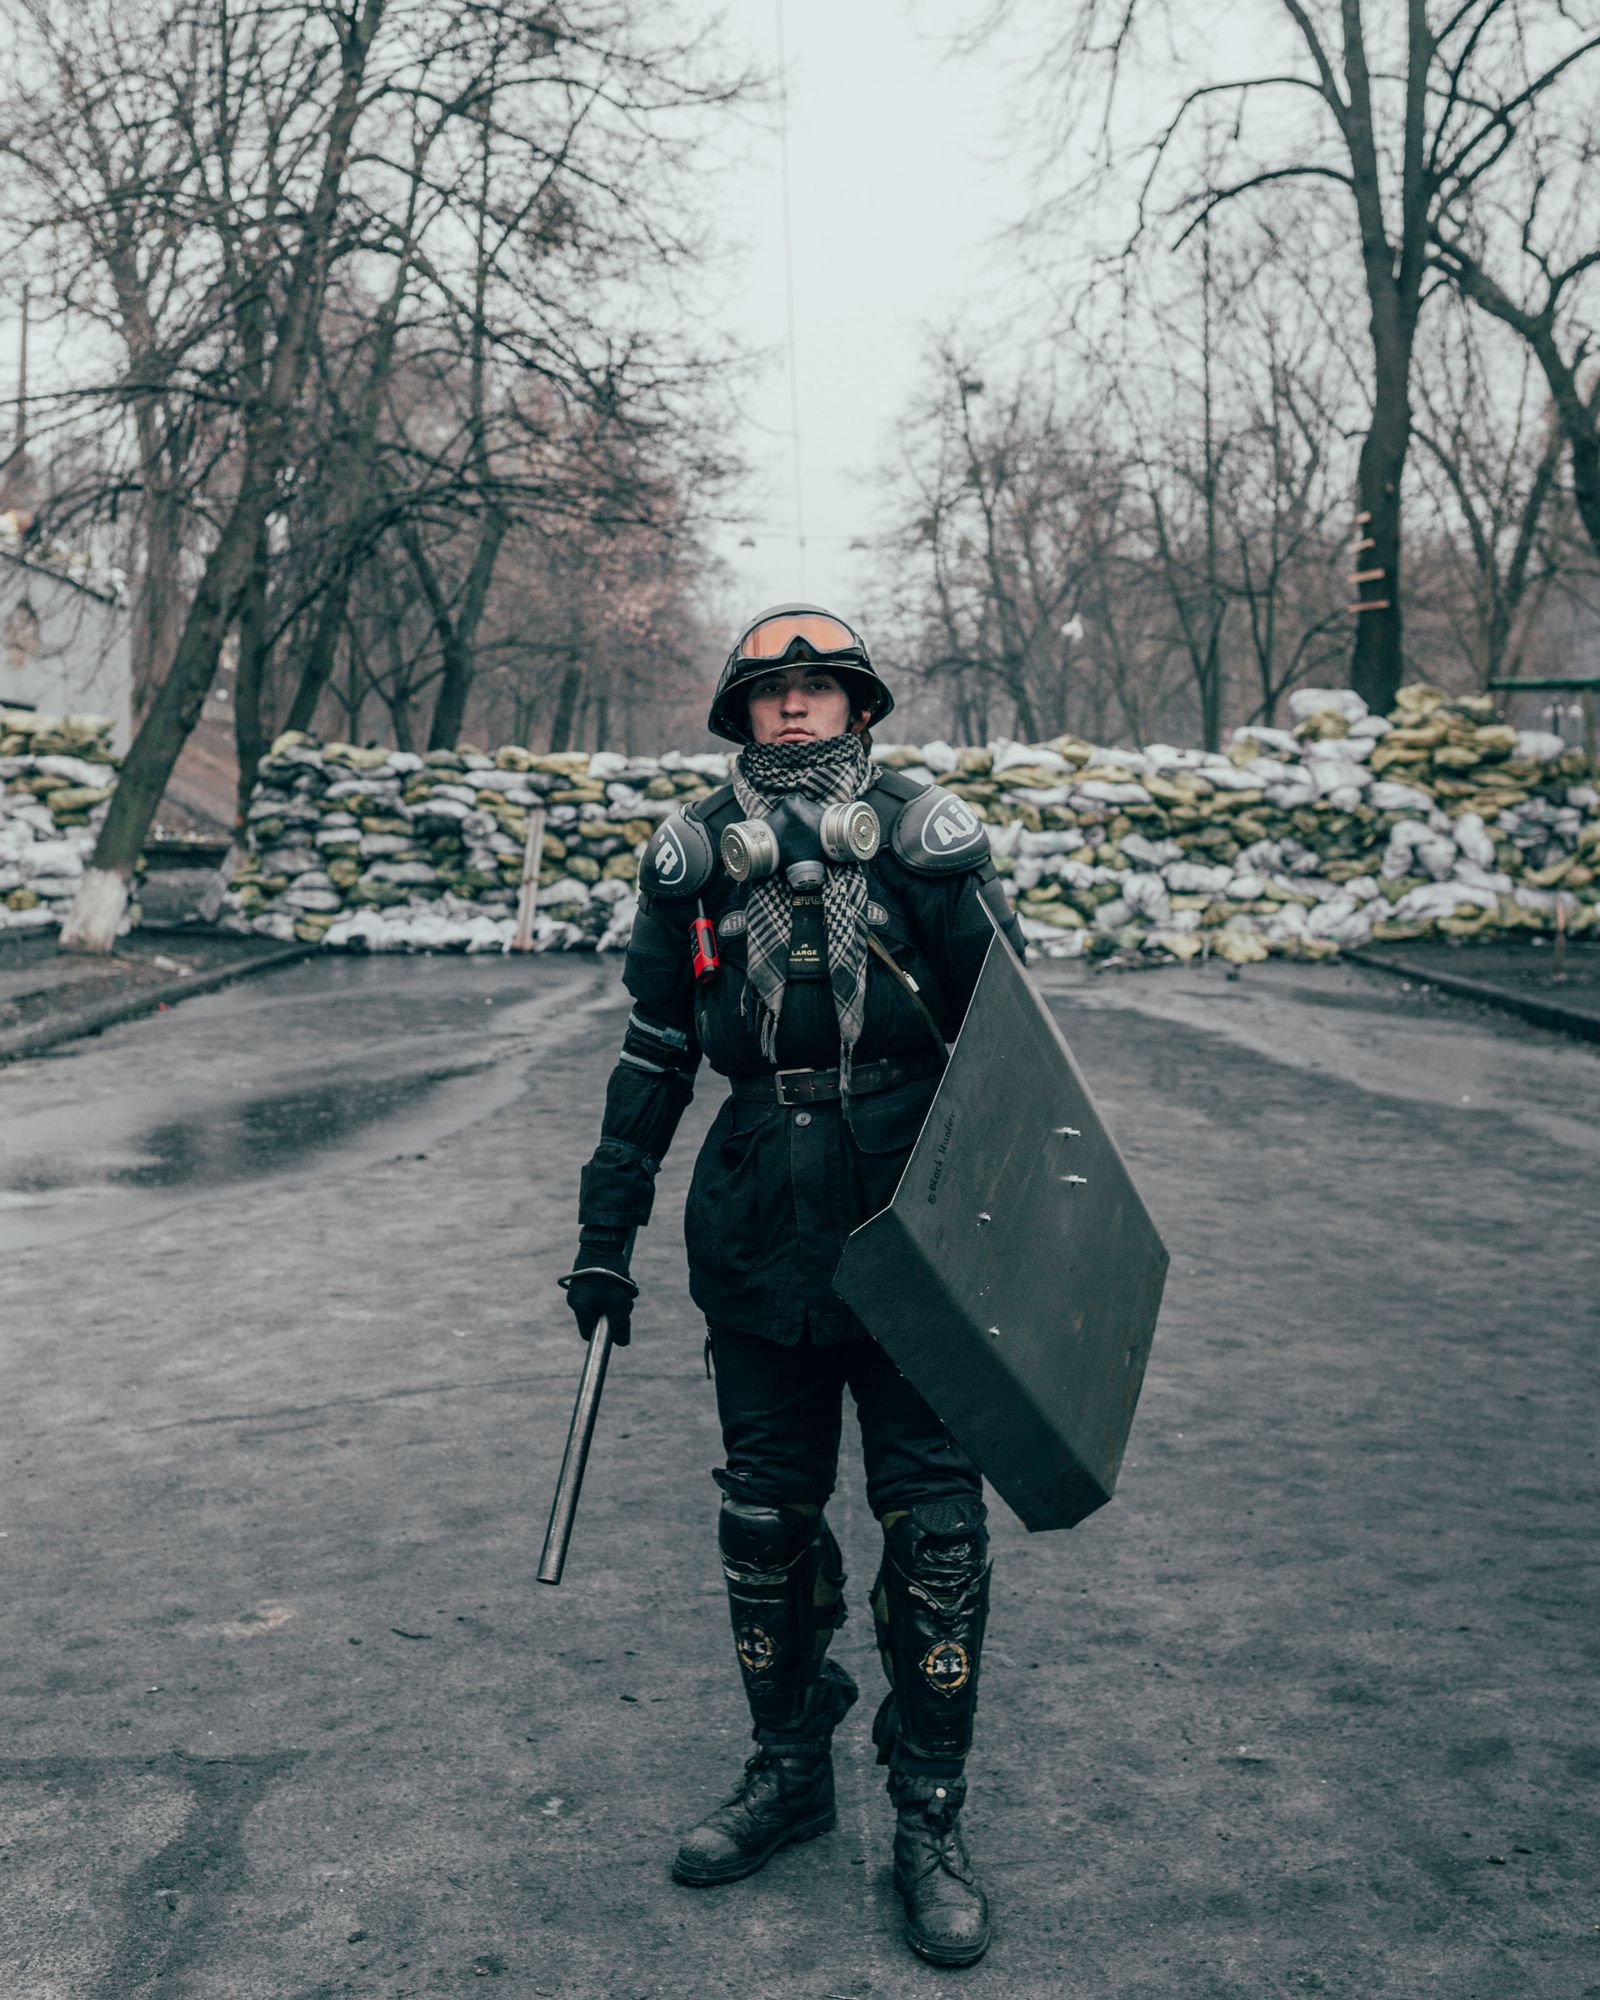 © Robin Hinsch - Protestor I, Kyiv, Ukraine, 2014, Kyiv, Ukraine, 2014